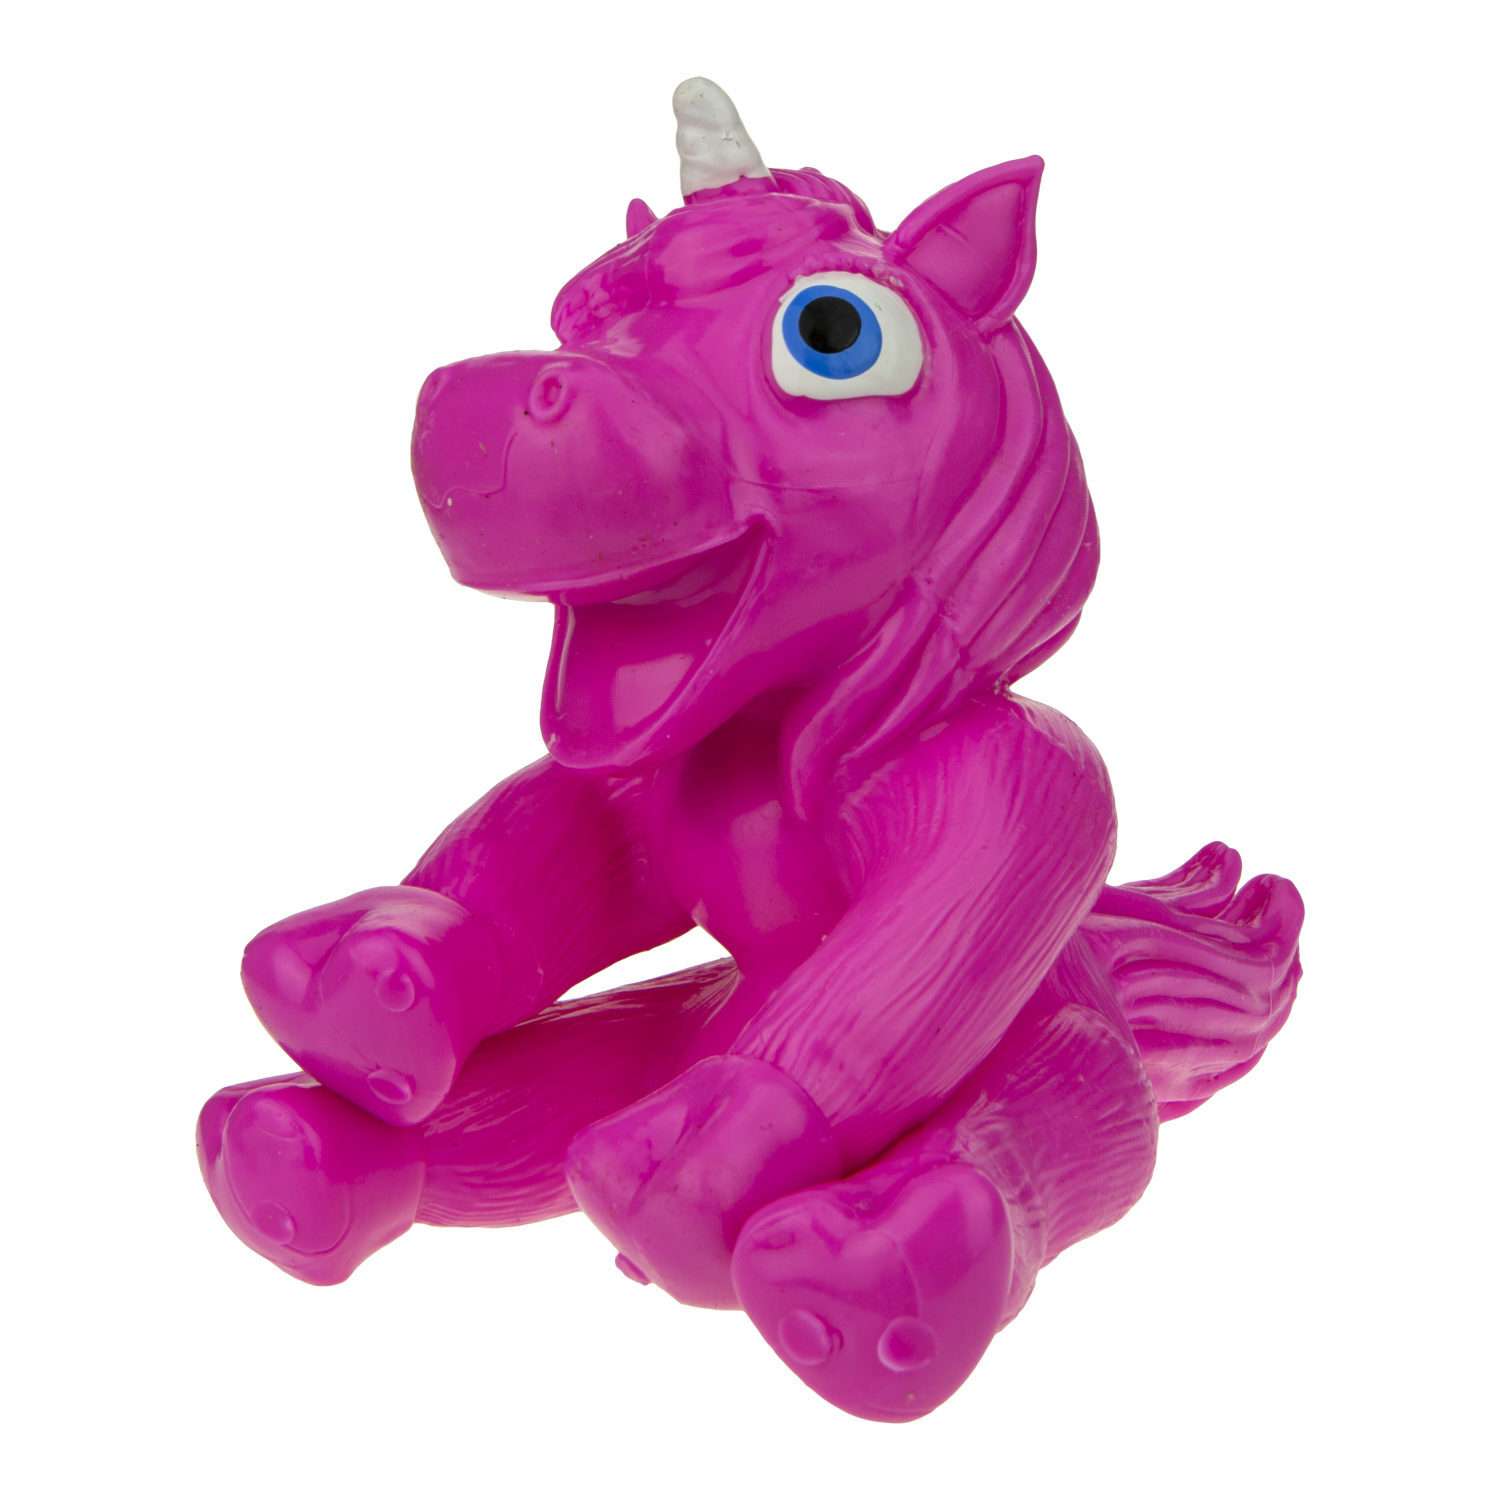 Фигурка Супер стрейчеры Етянорог тянущаяся игрушка блистер 16см розовый - фото 1